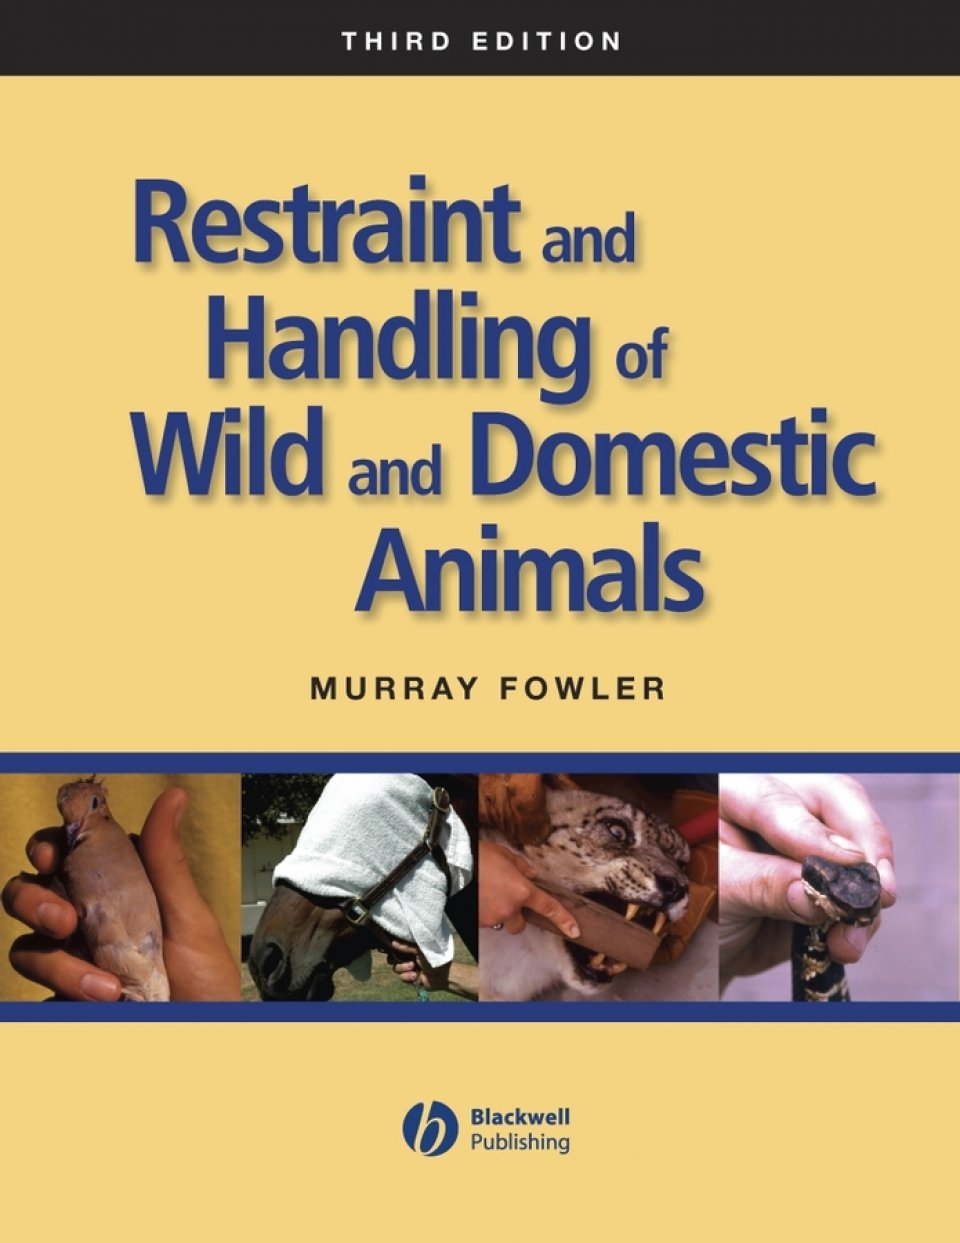 Restraint & Handling of Wild & Domestic Animals | ACES